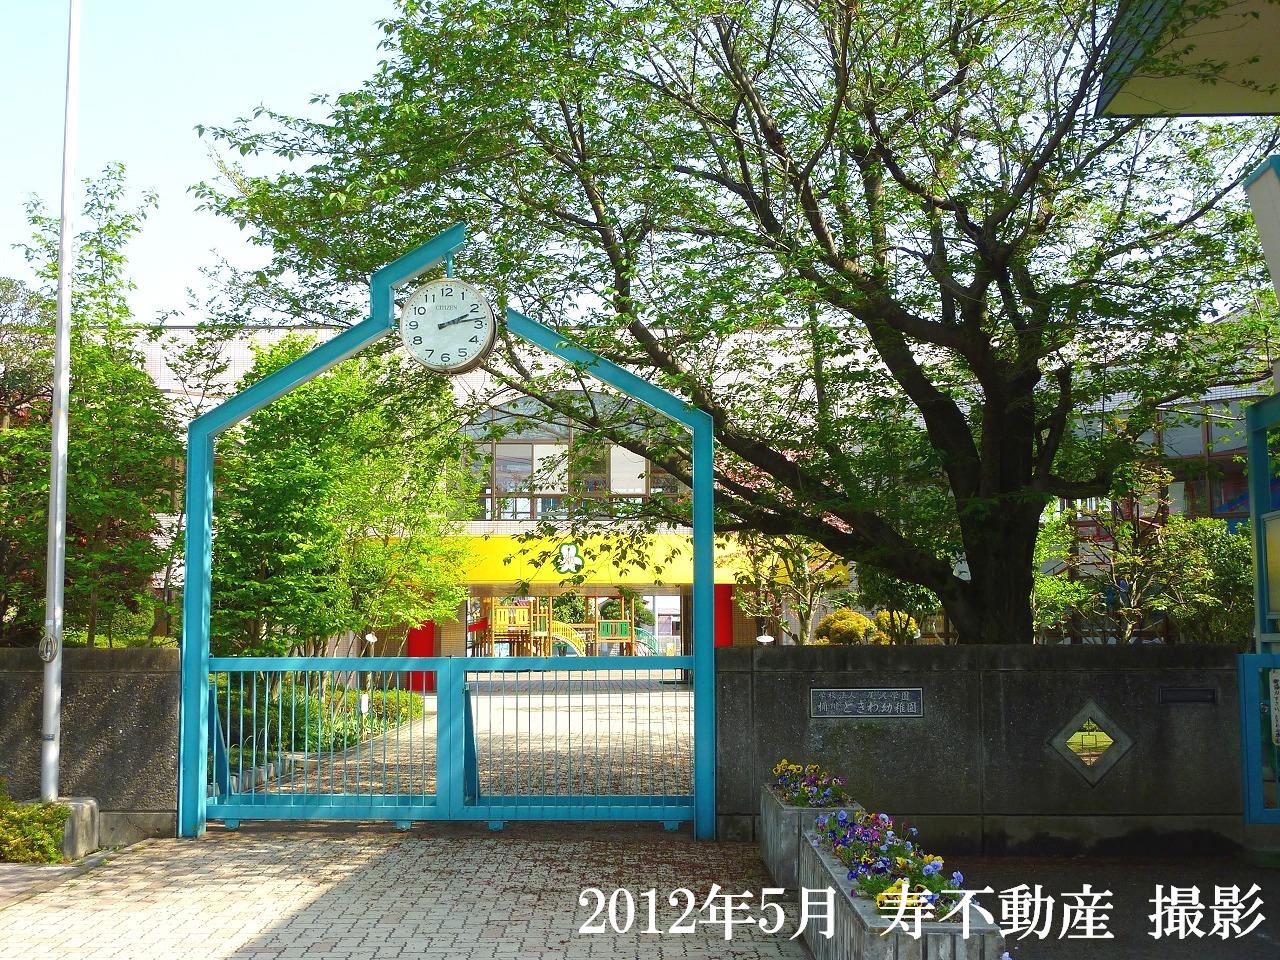 kindergarten ・ Nursery. Okegawa Tokiwa kindergarten (kindergarten ・ 860m to the nursery)